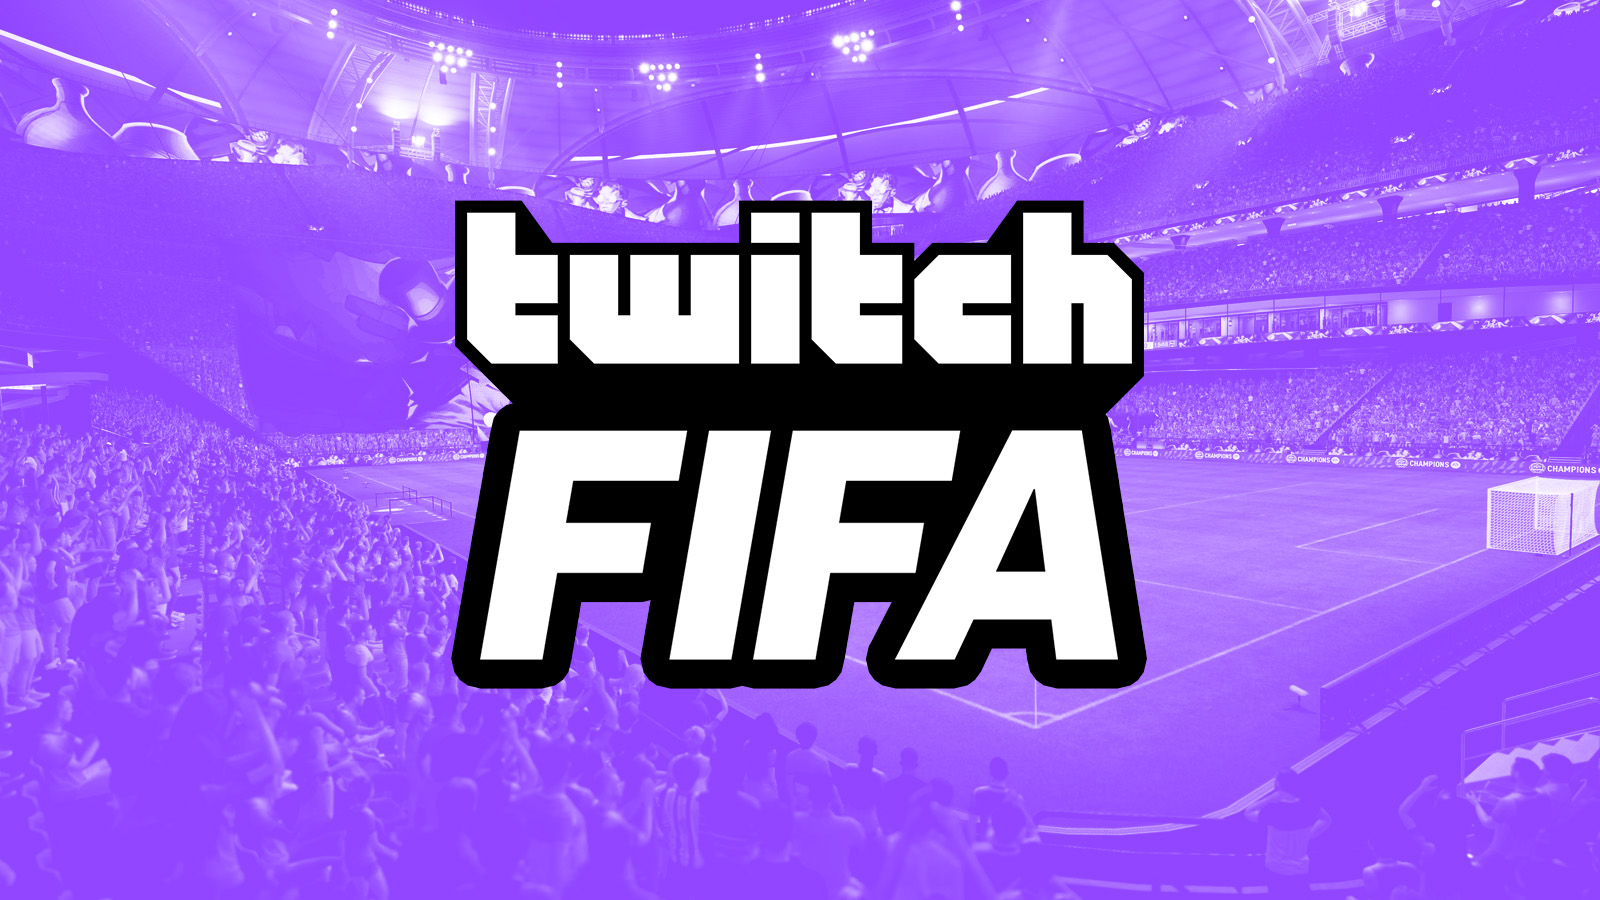 FIFA 23 - Twitch